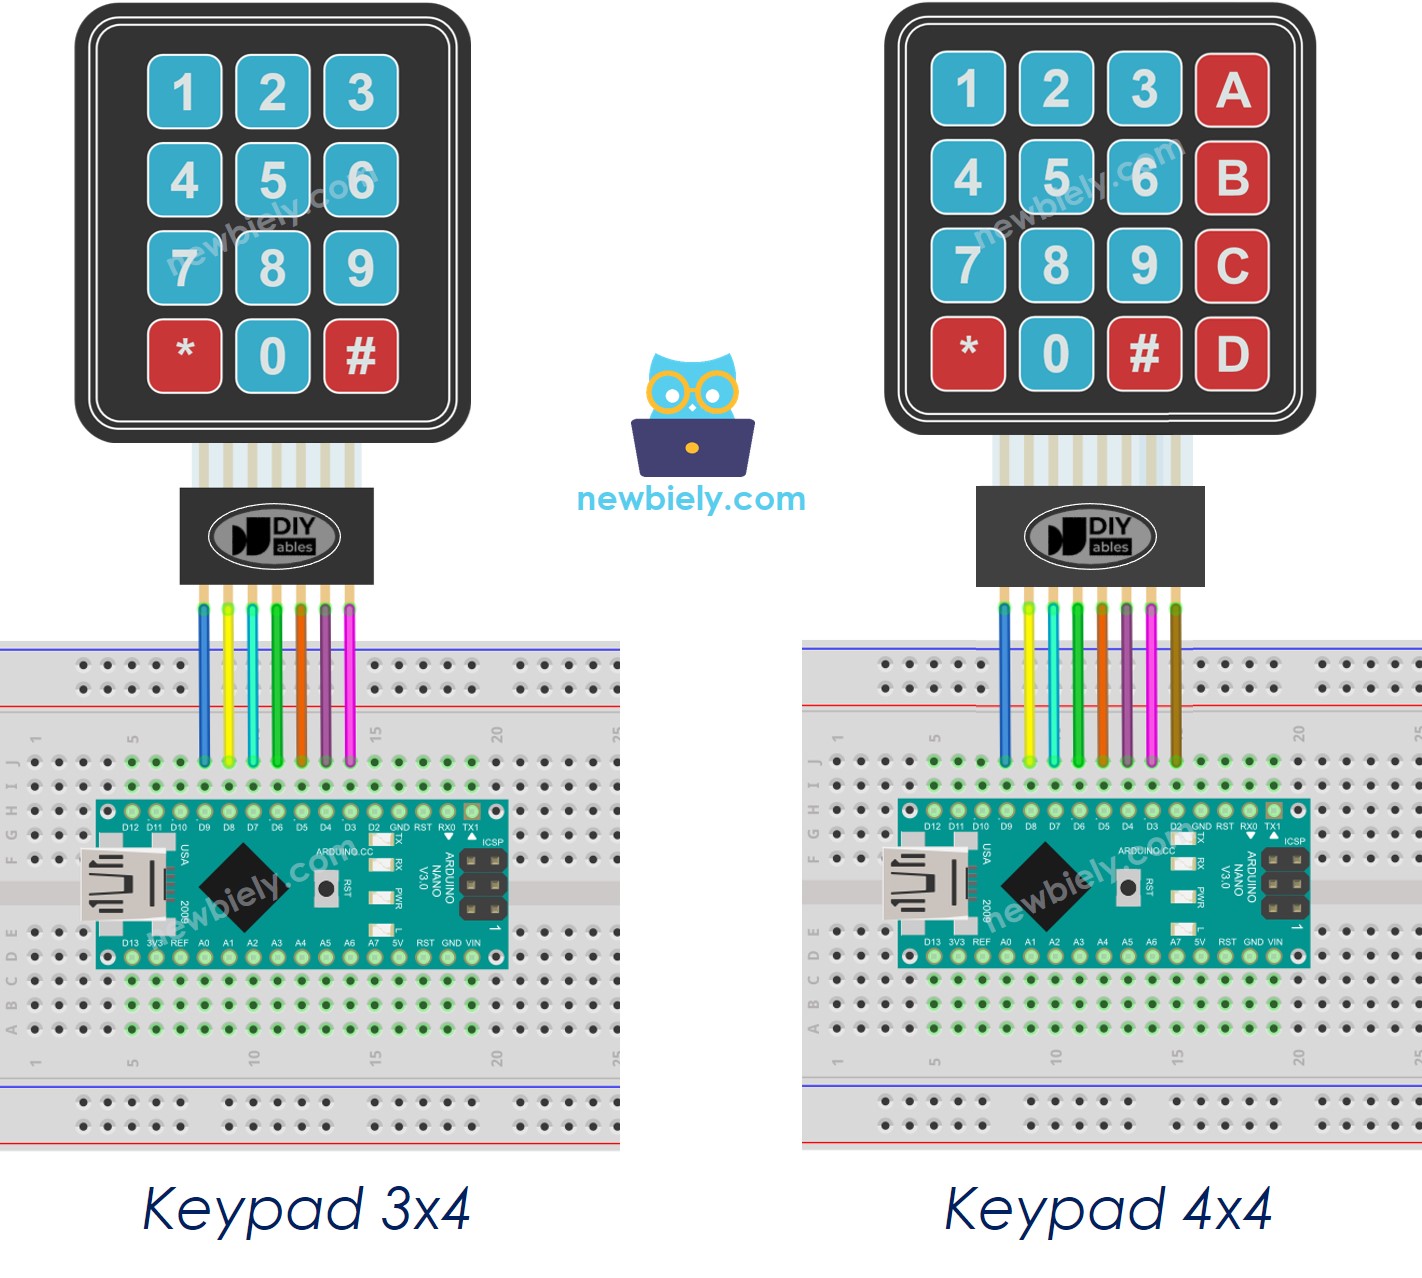 The wiring diagram between Arduino Nano and Keypad